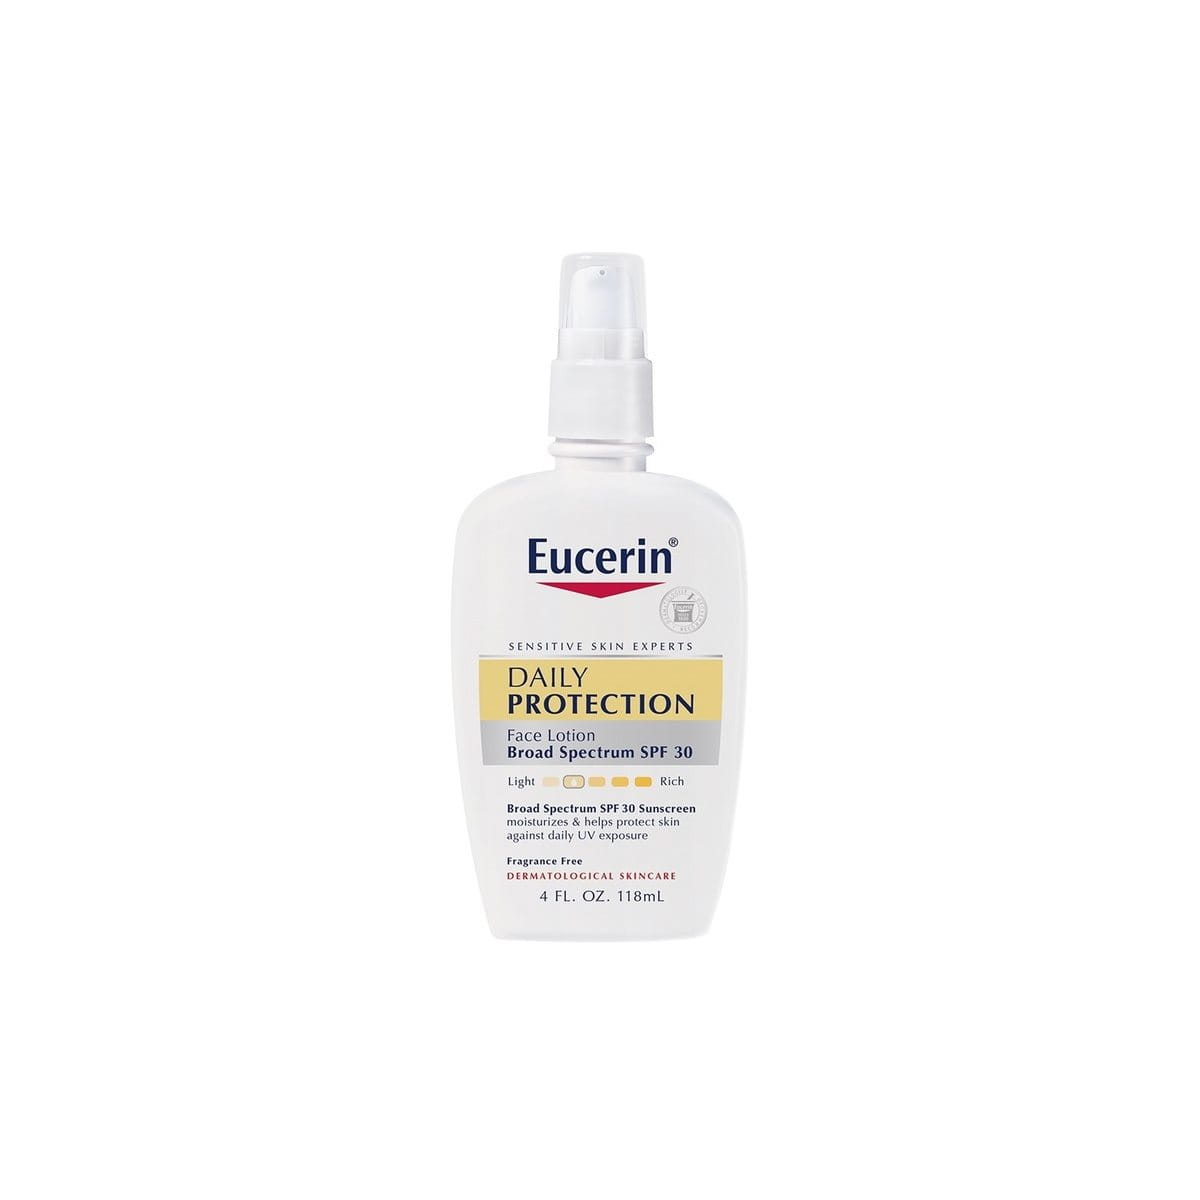 meubilair Meditatief schuifelen Eucerin® Daily Protection Broad Spectrum SPF 30 Sunscreen